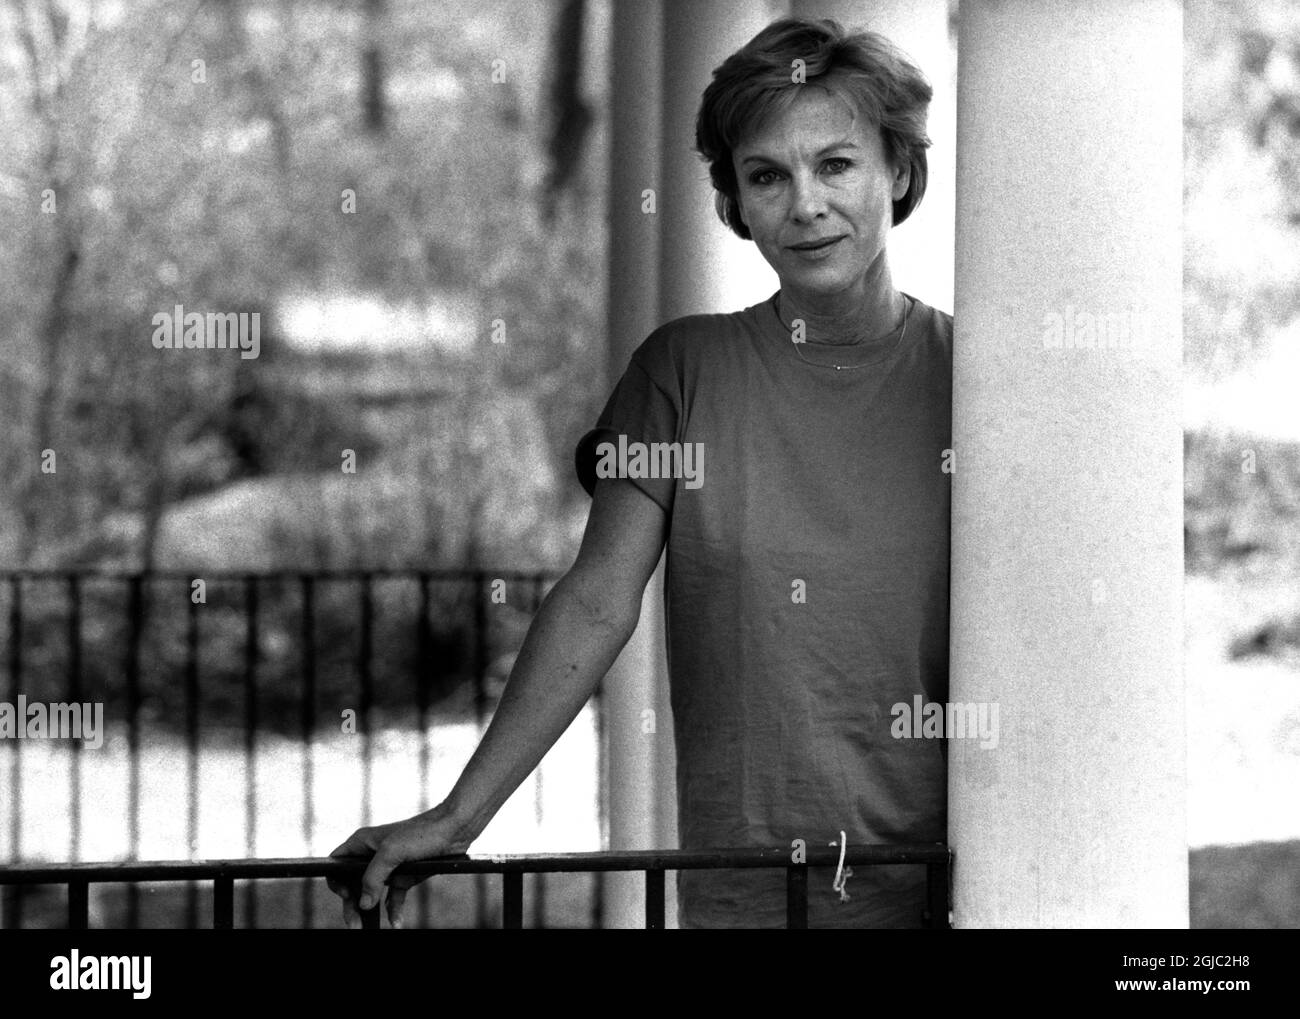 ARKIV 19880508. Bibi Andersson, Actress Foto: Dan Hansson / SvD / SCANPIX / Kod: 11014  Stock Photo